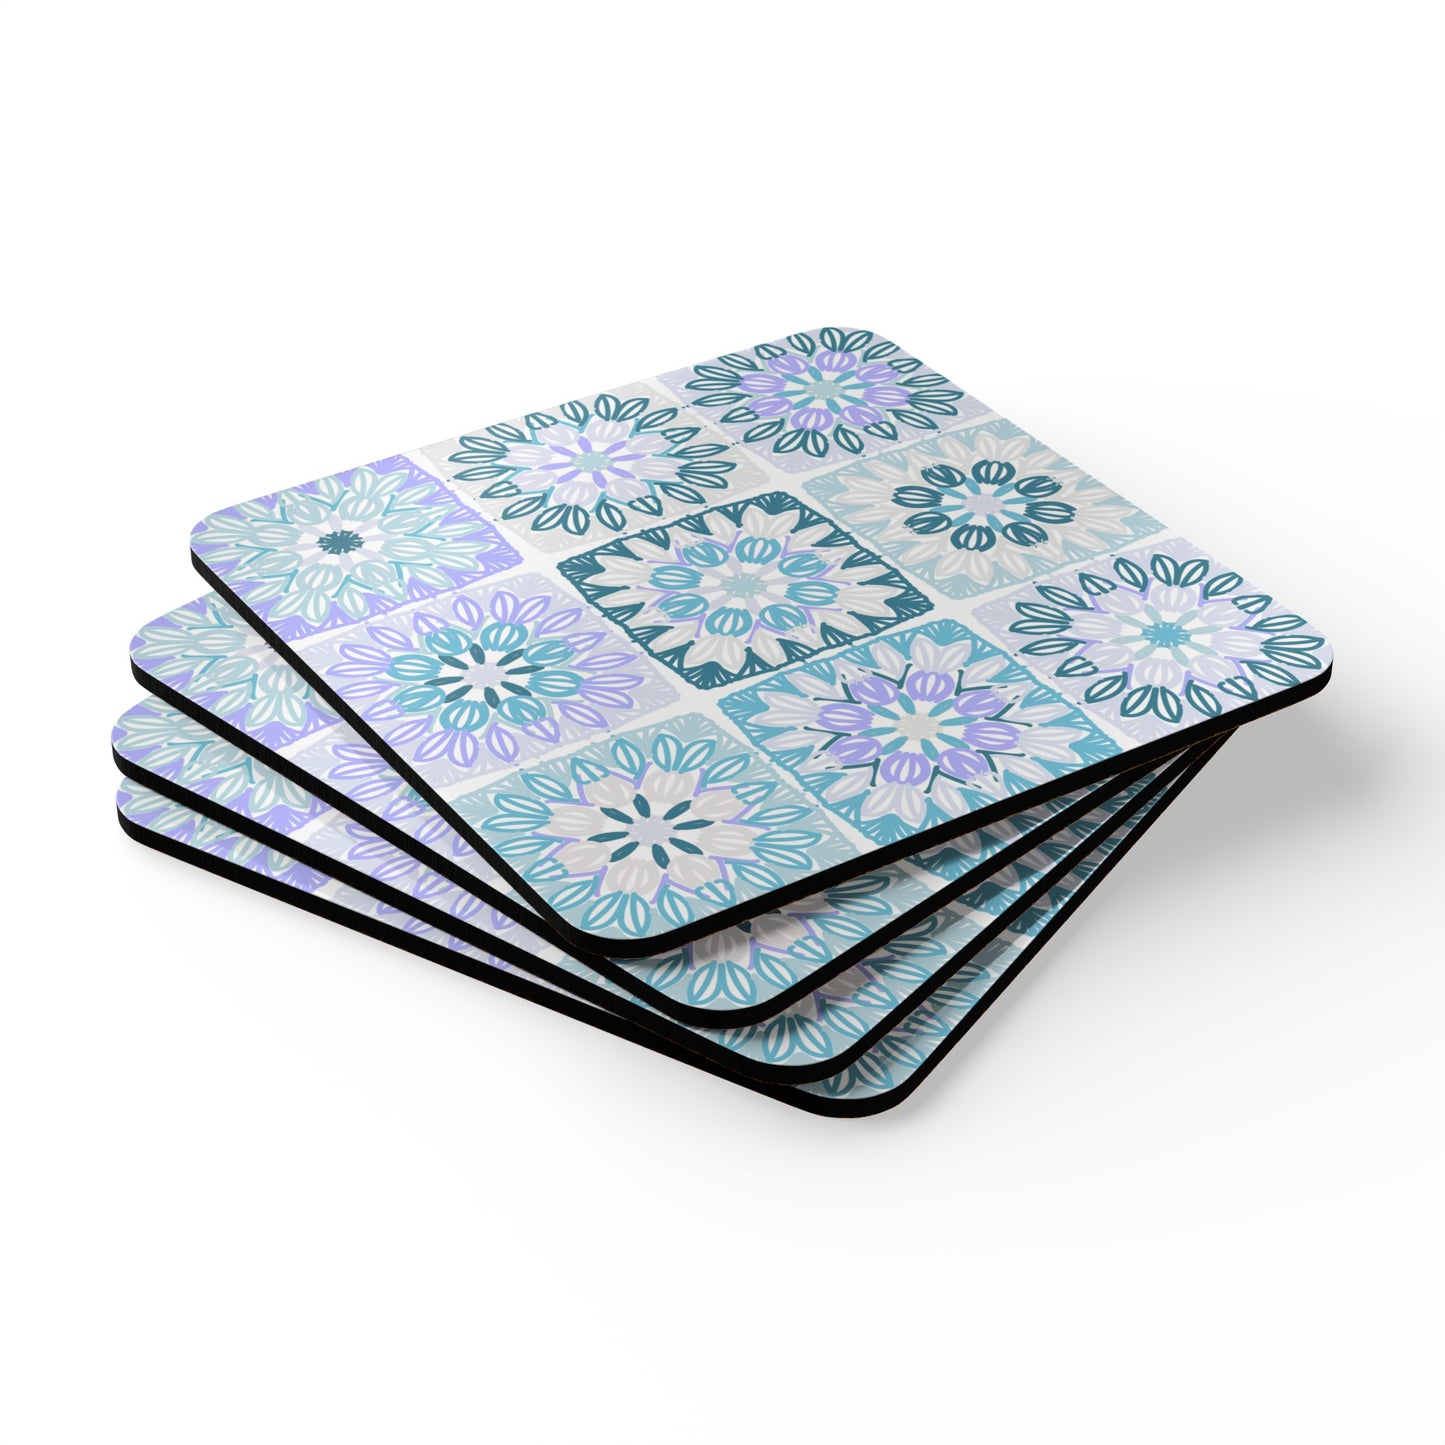 Granny Square in Blueberry Milk | Corkwood Coaster Set | Crochet | Knit | Craft